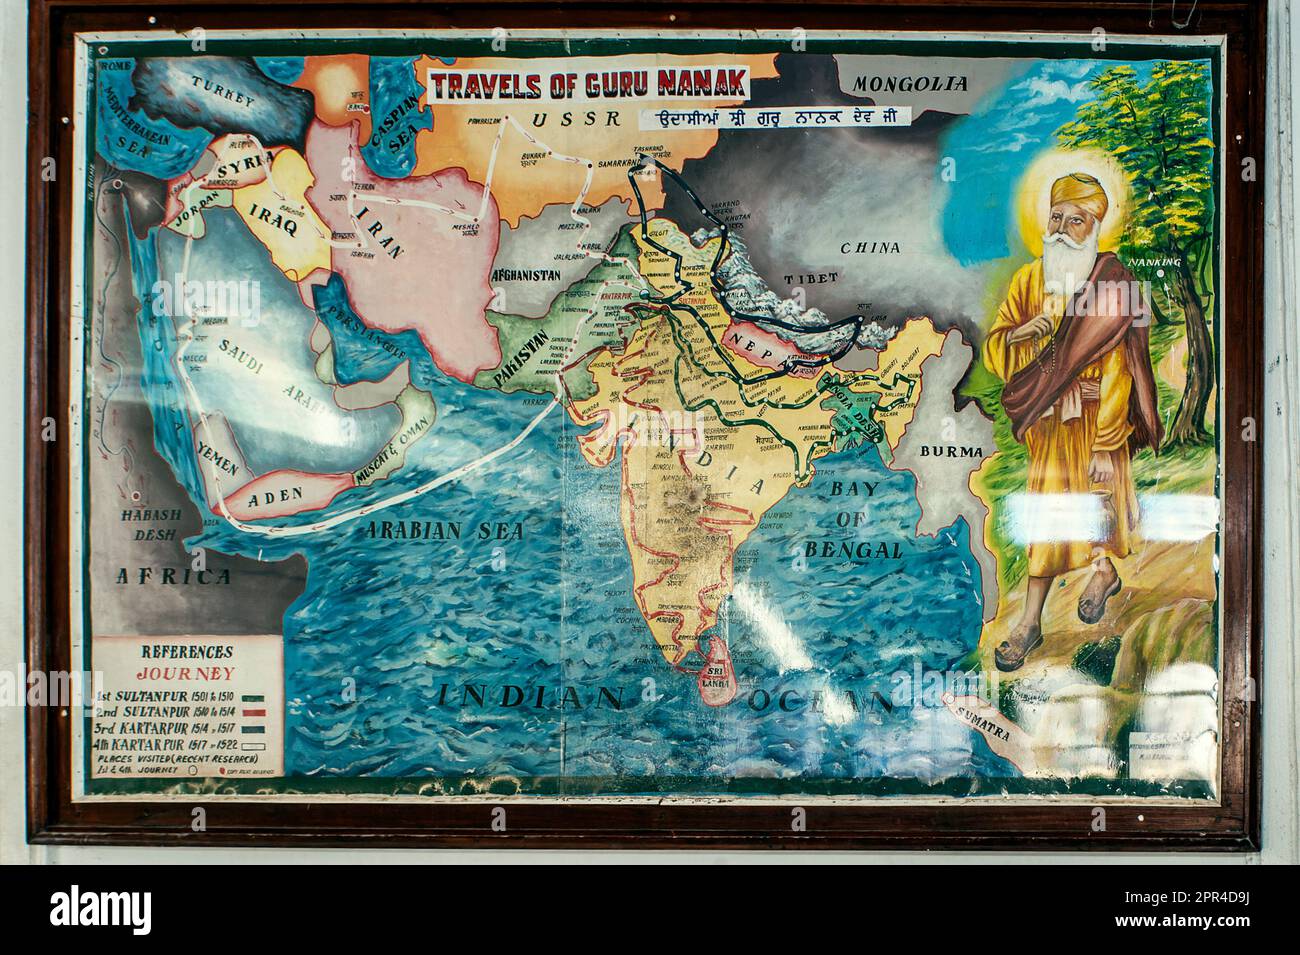 12 22 2010 Vintage Map showing the Travel Path of Guru Nanak Ji a Founder of Sikhism at Gurudwara Nanak Jhira, Shiva Nagar, Bidar, Karnataka India Asi Stock Photo